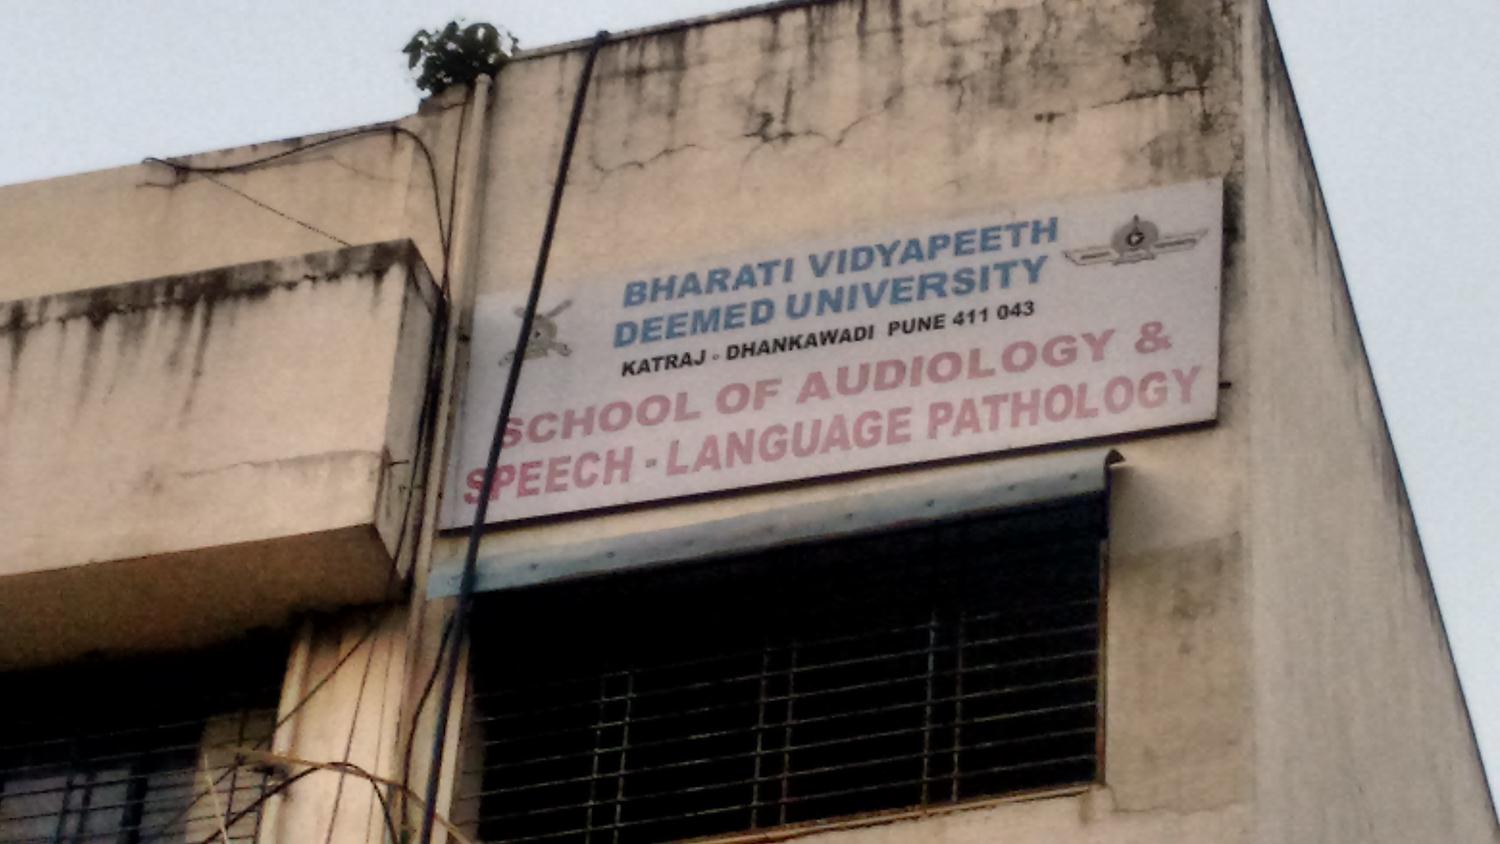 Bharati Vidyapeeth School of Audiology and Speech Language Pathology, Pune Image